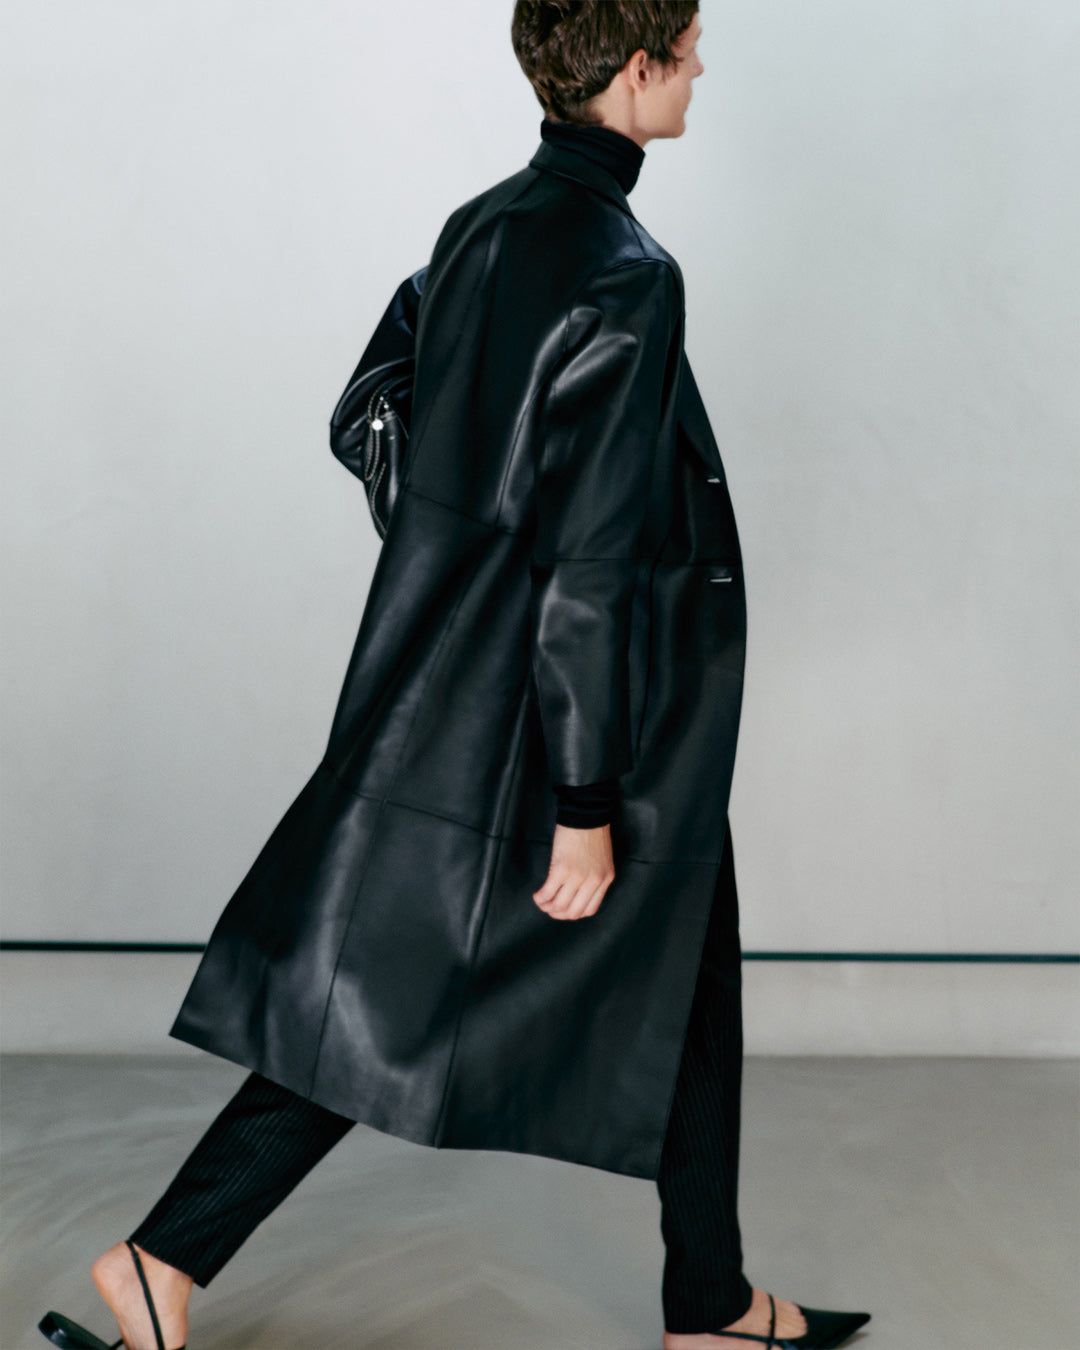 Sara Blomqvist by Daniel Shea for Toteme Fall-Winter Minimal Fashion